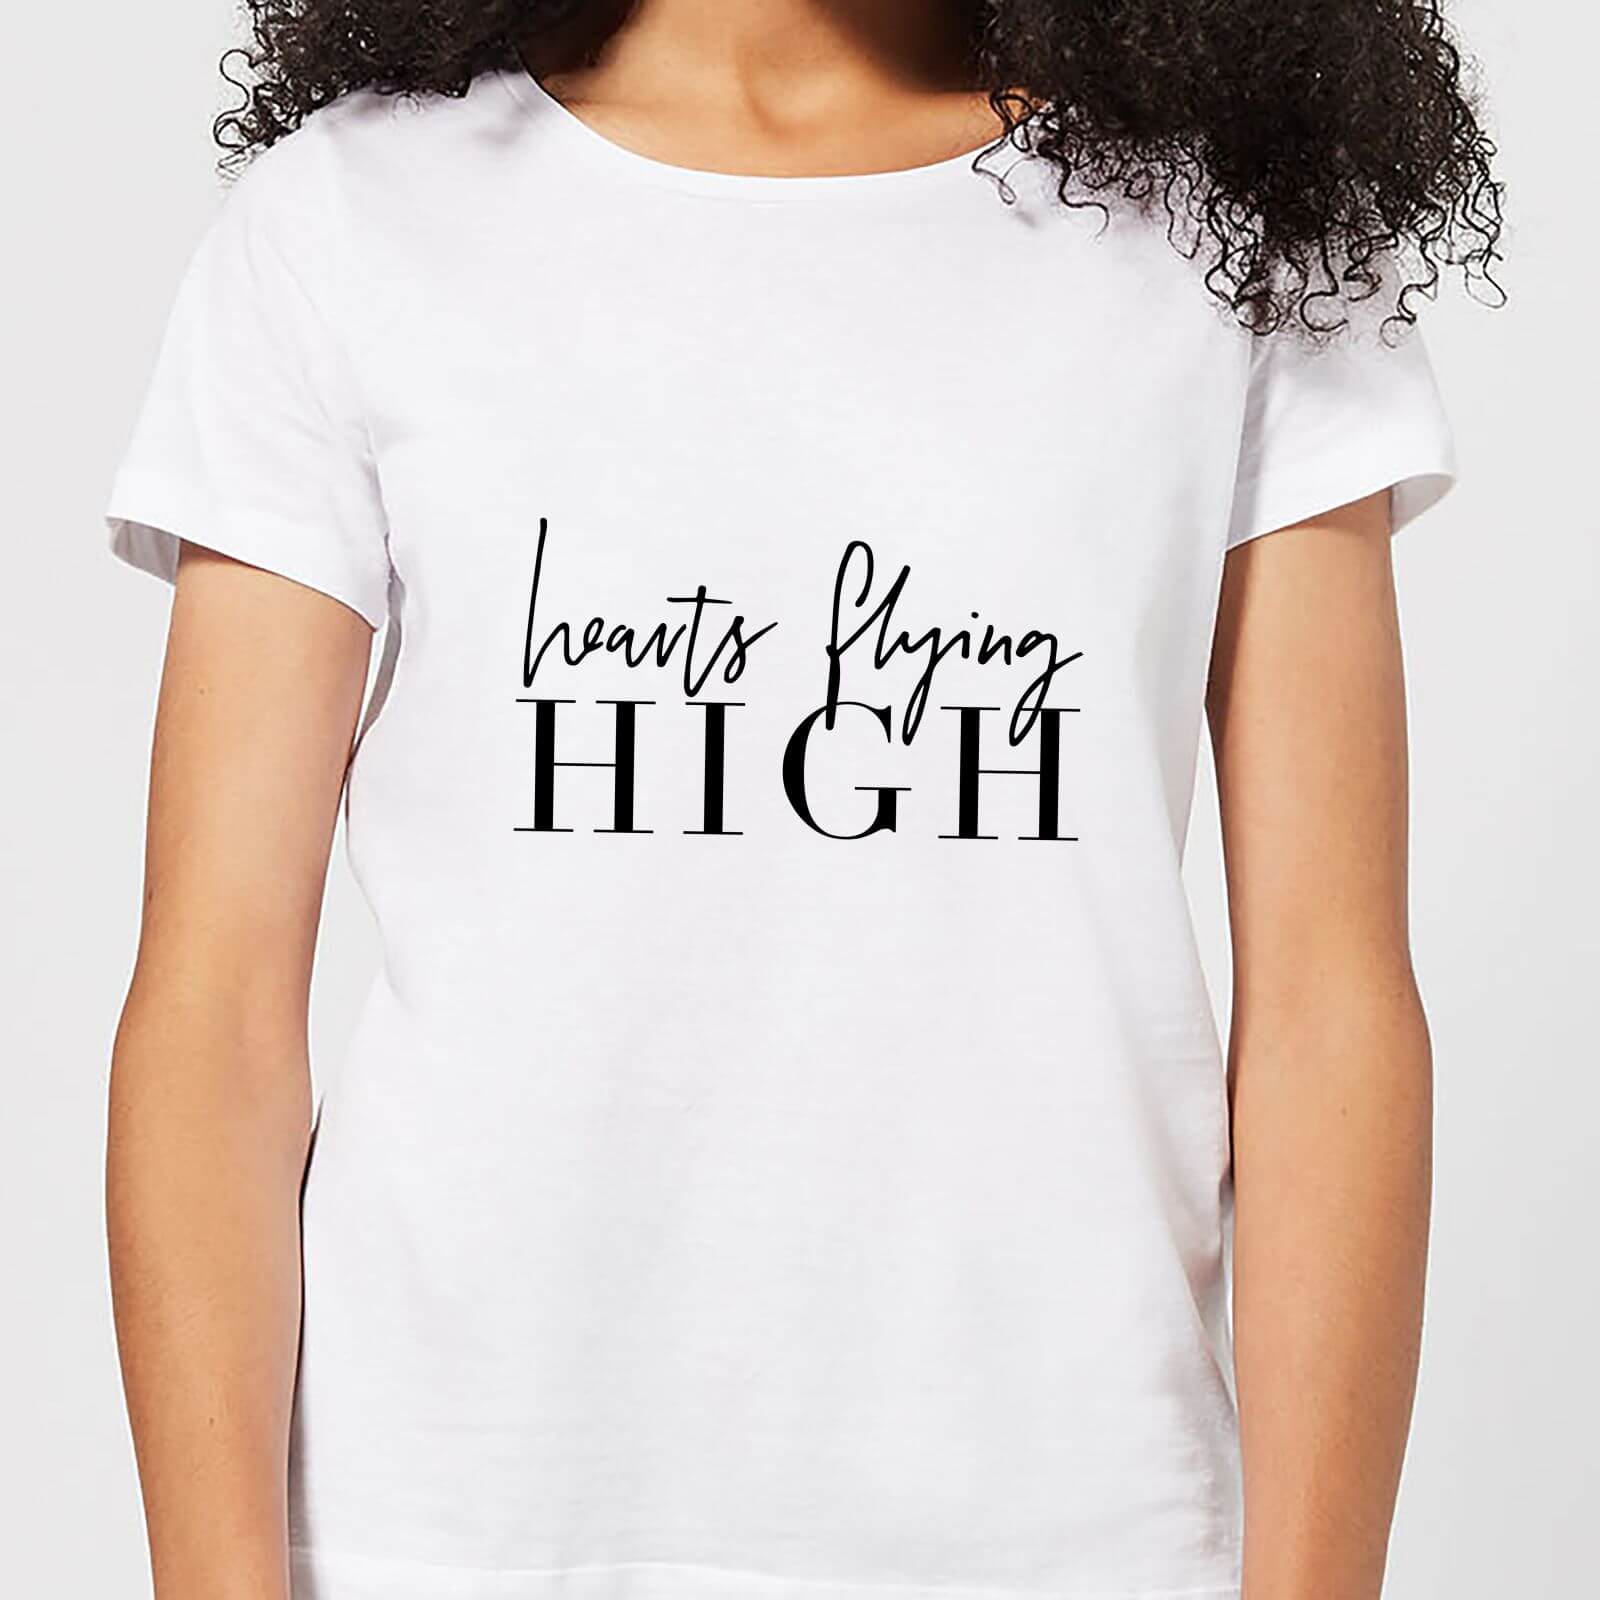 Hearts Flying High Women's T-Shirt - White - XL - White